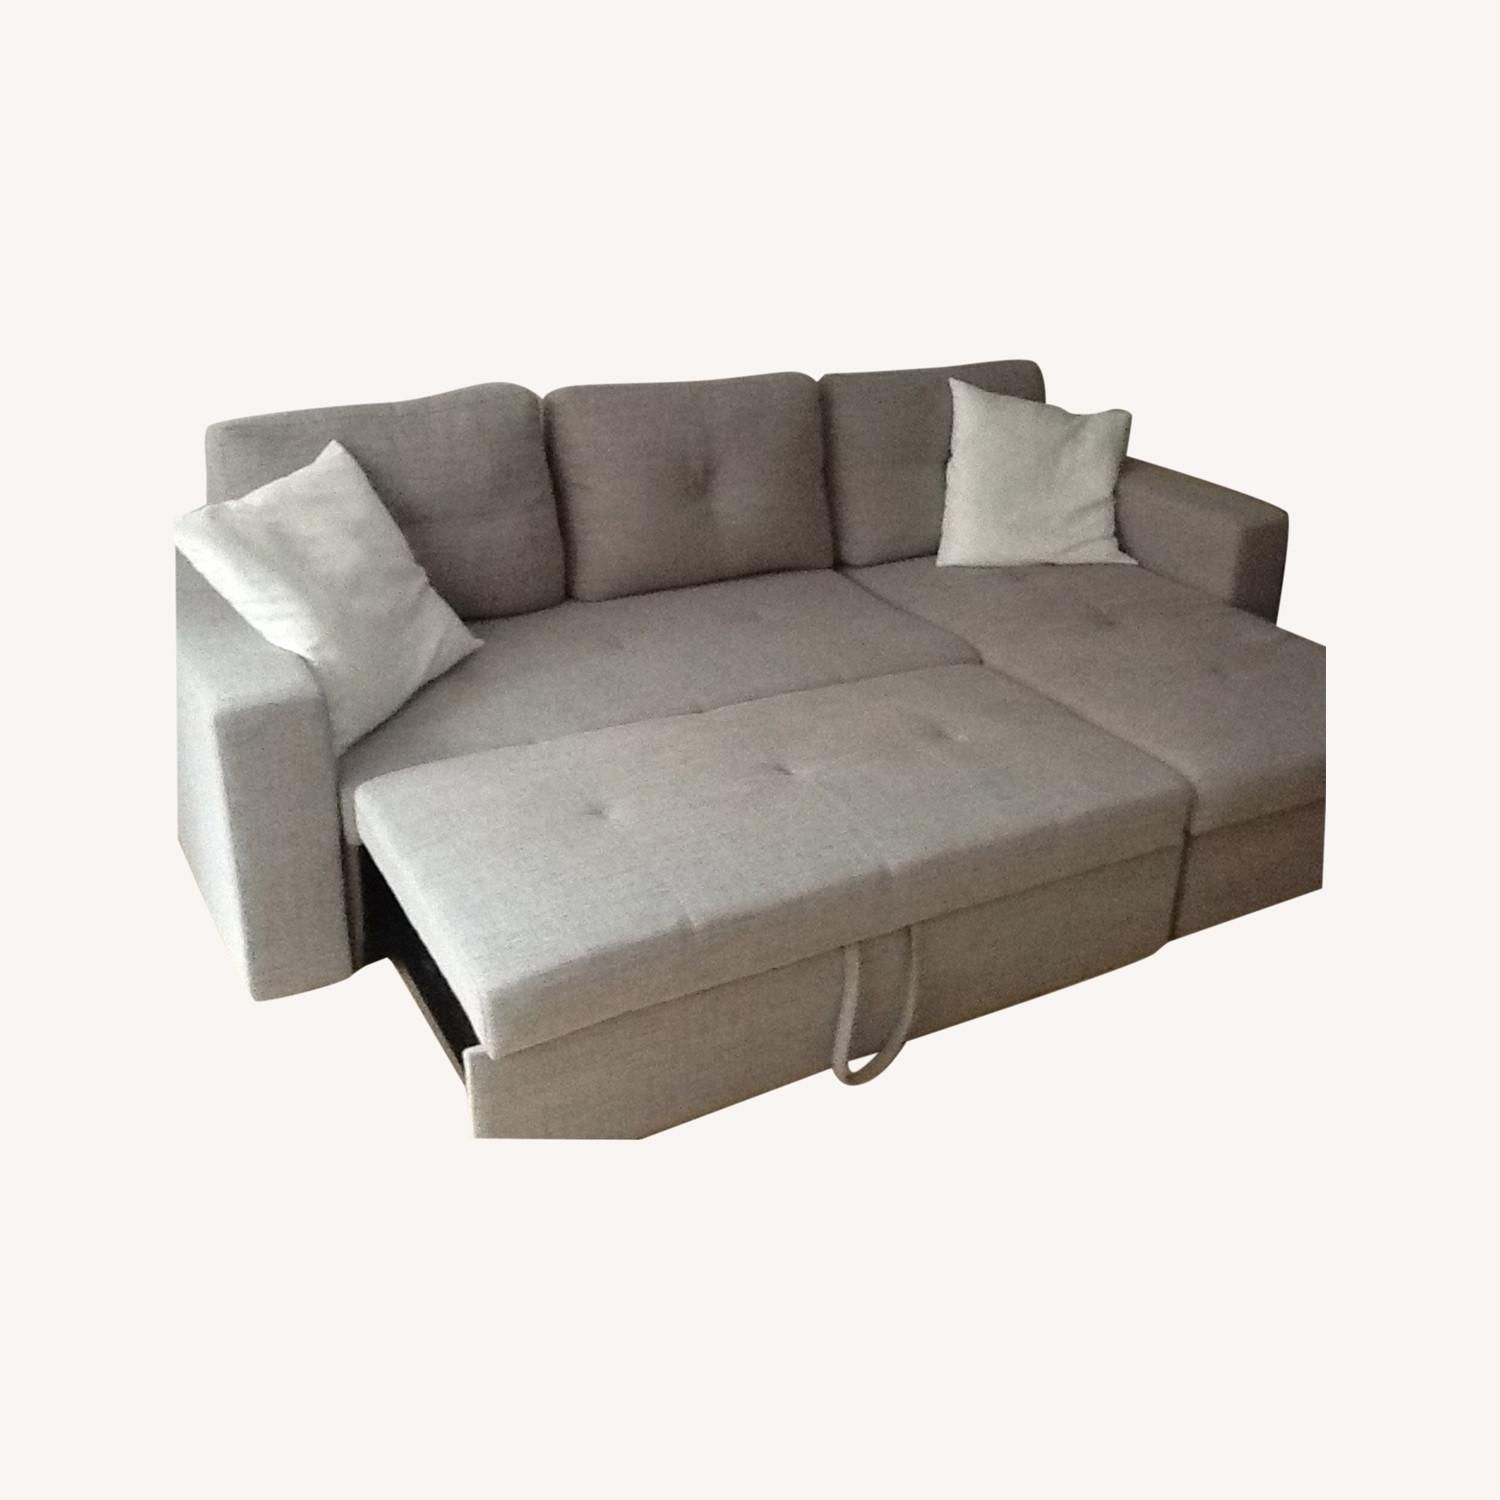 Grey Pull Out Sleeper Sofa – Aptdeco Pertaining To 3 In 1 Gray Pull Out Sleeper Sofas (Gallery 6 of 20)